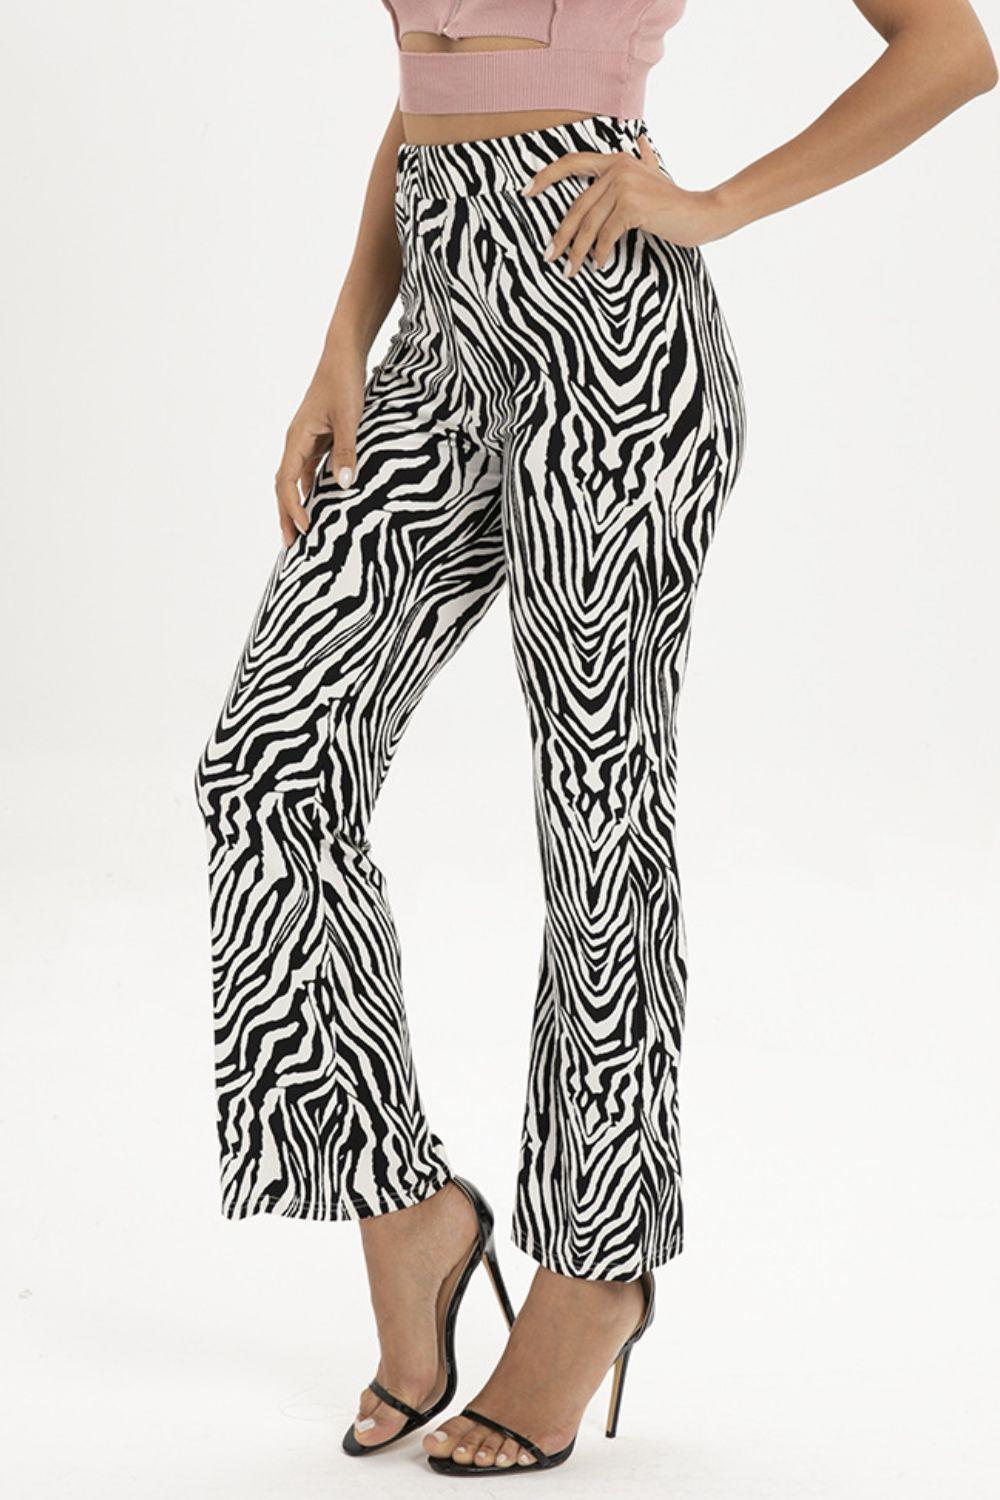 Be Bold High Waist Straight Leg Zebra Print Pants - MXSTUDIO.COM